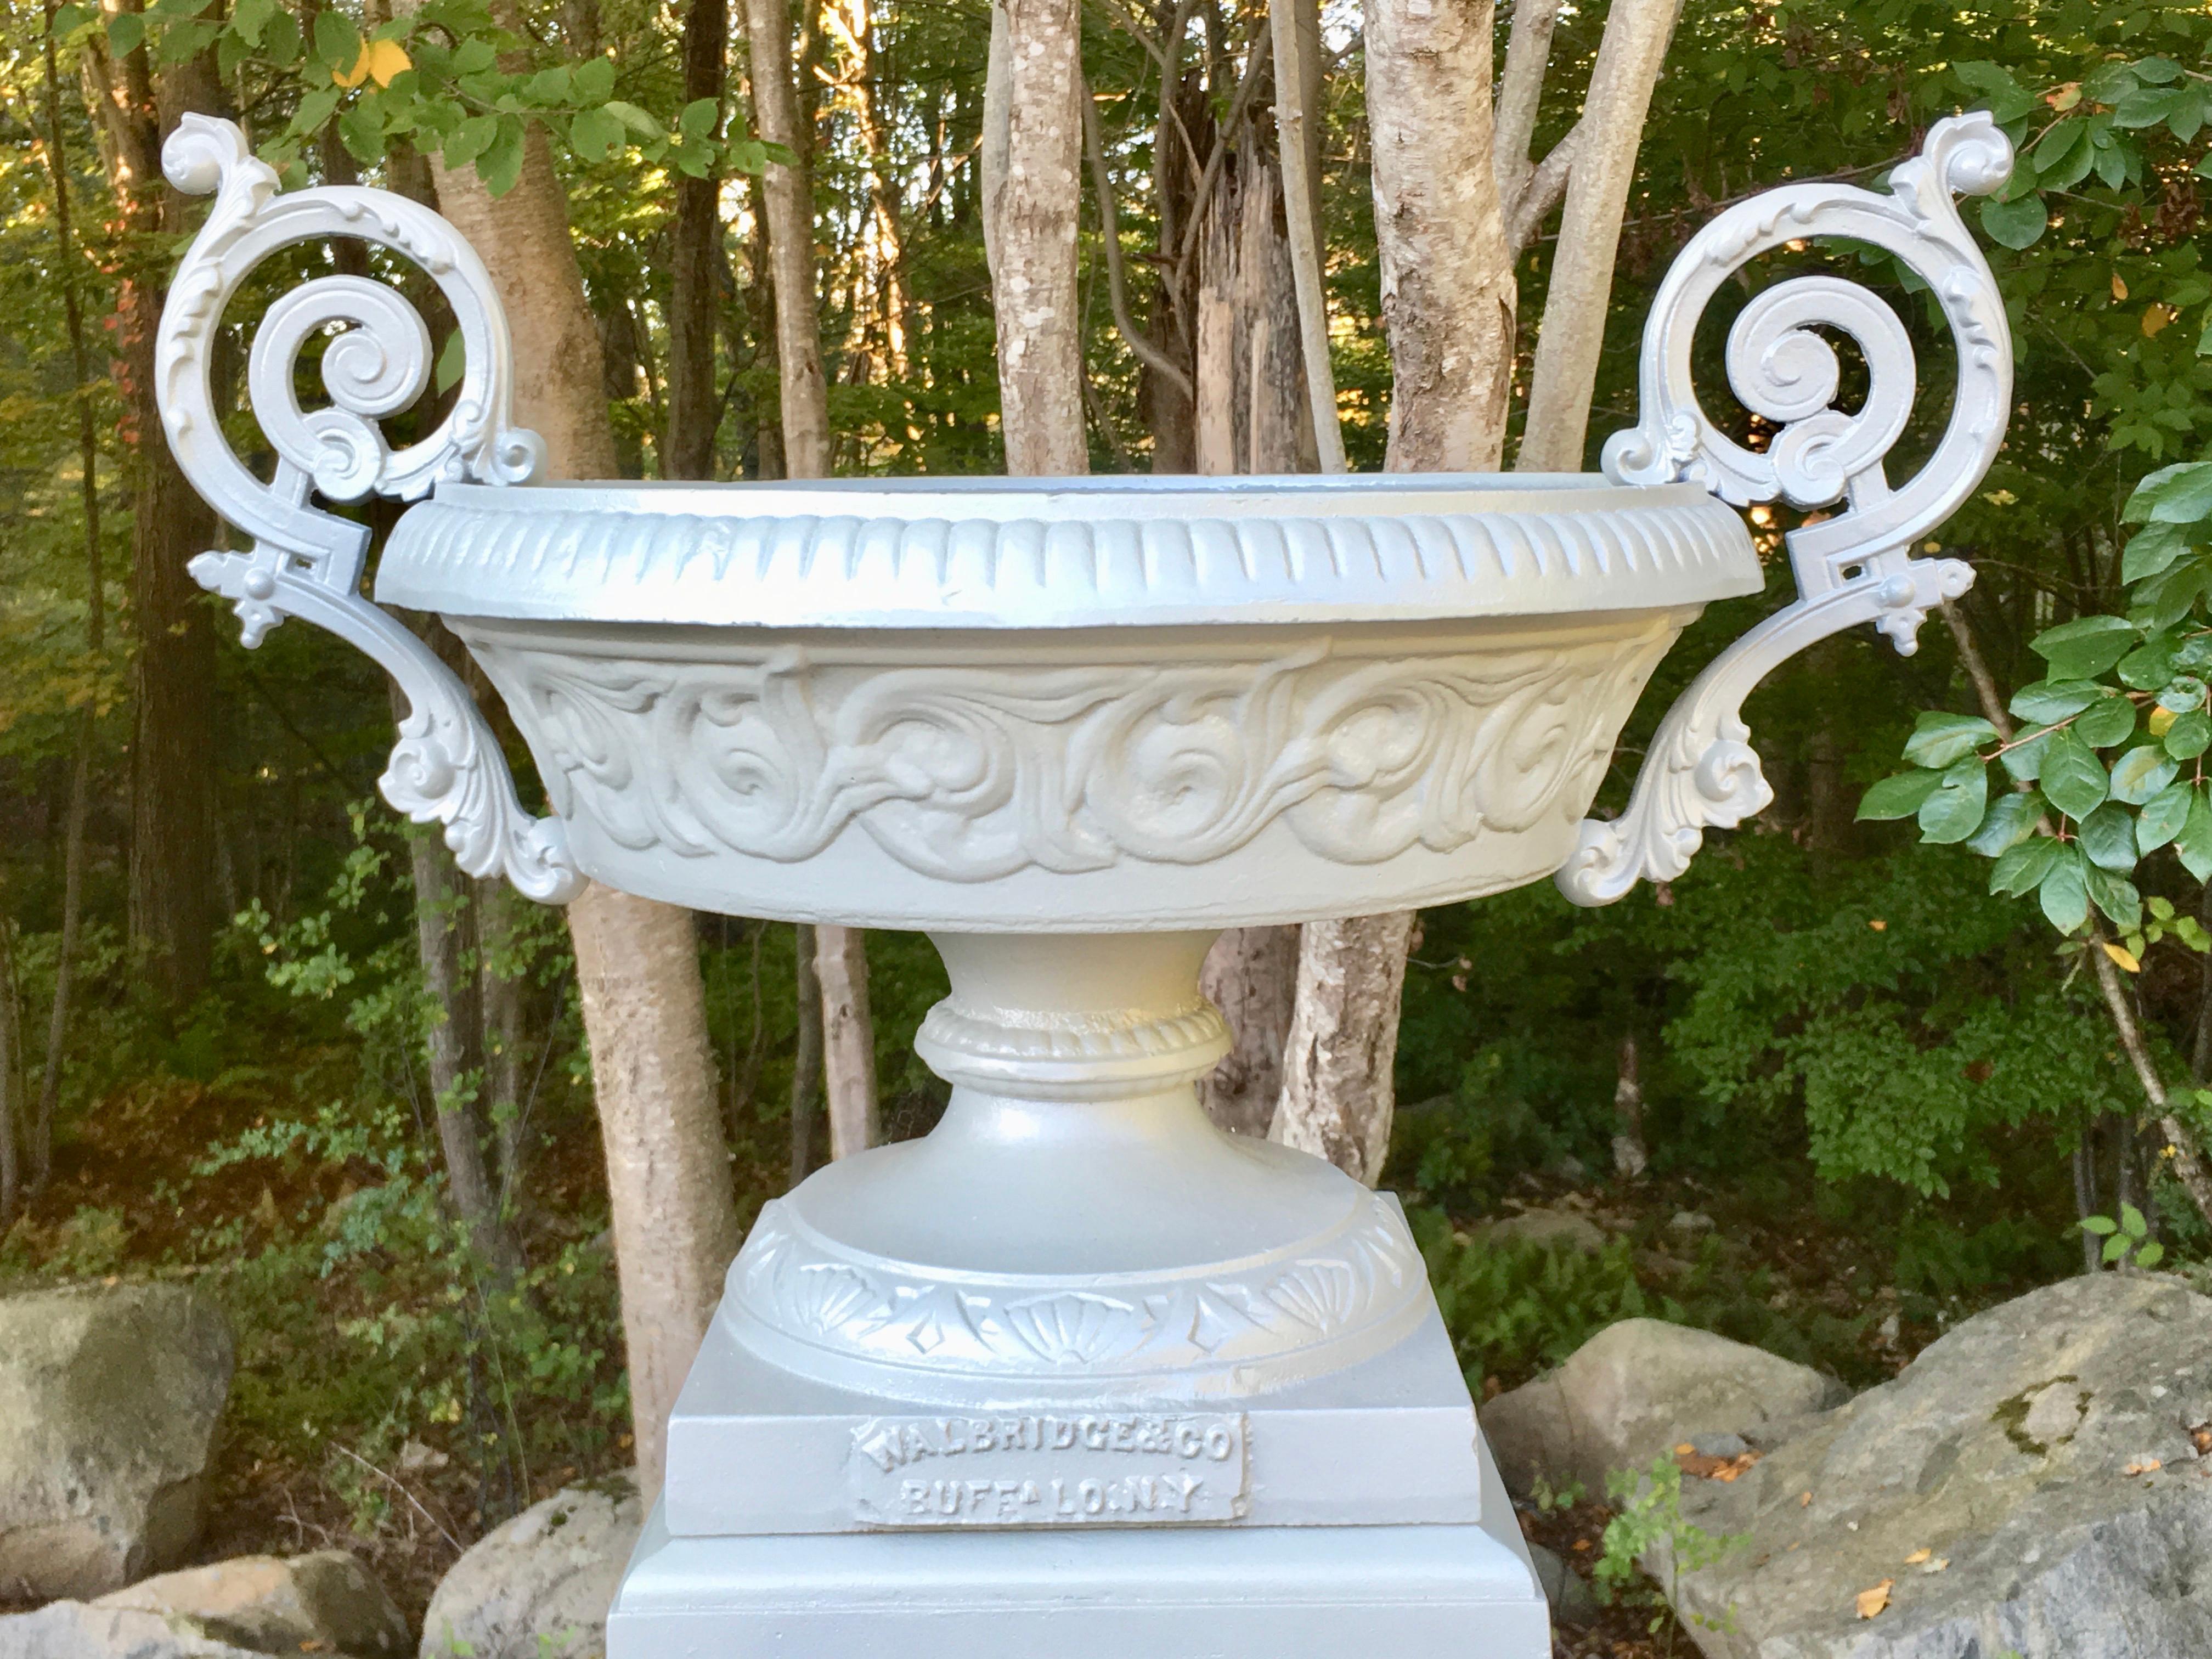 Walbridge & Co. of Buffalo Cast Iron Fountain Urn 3